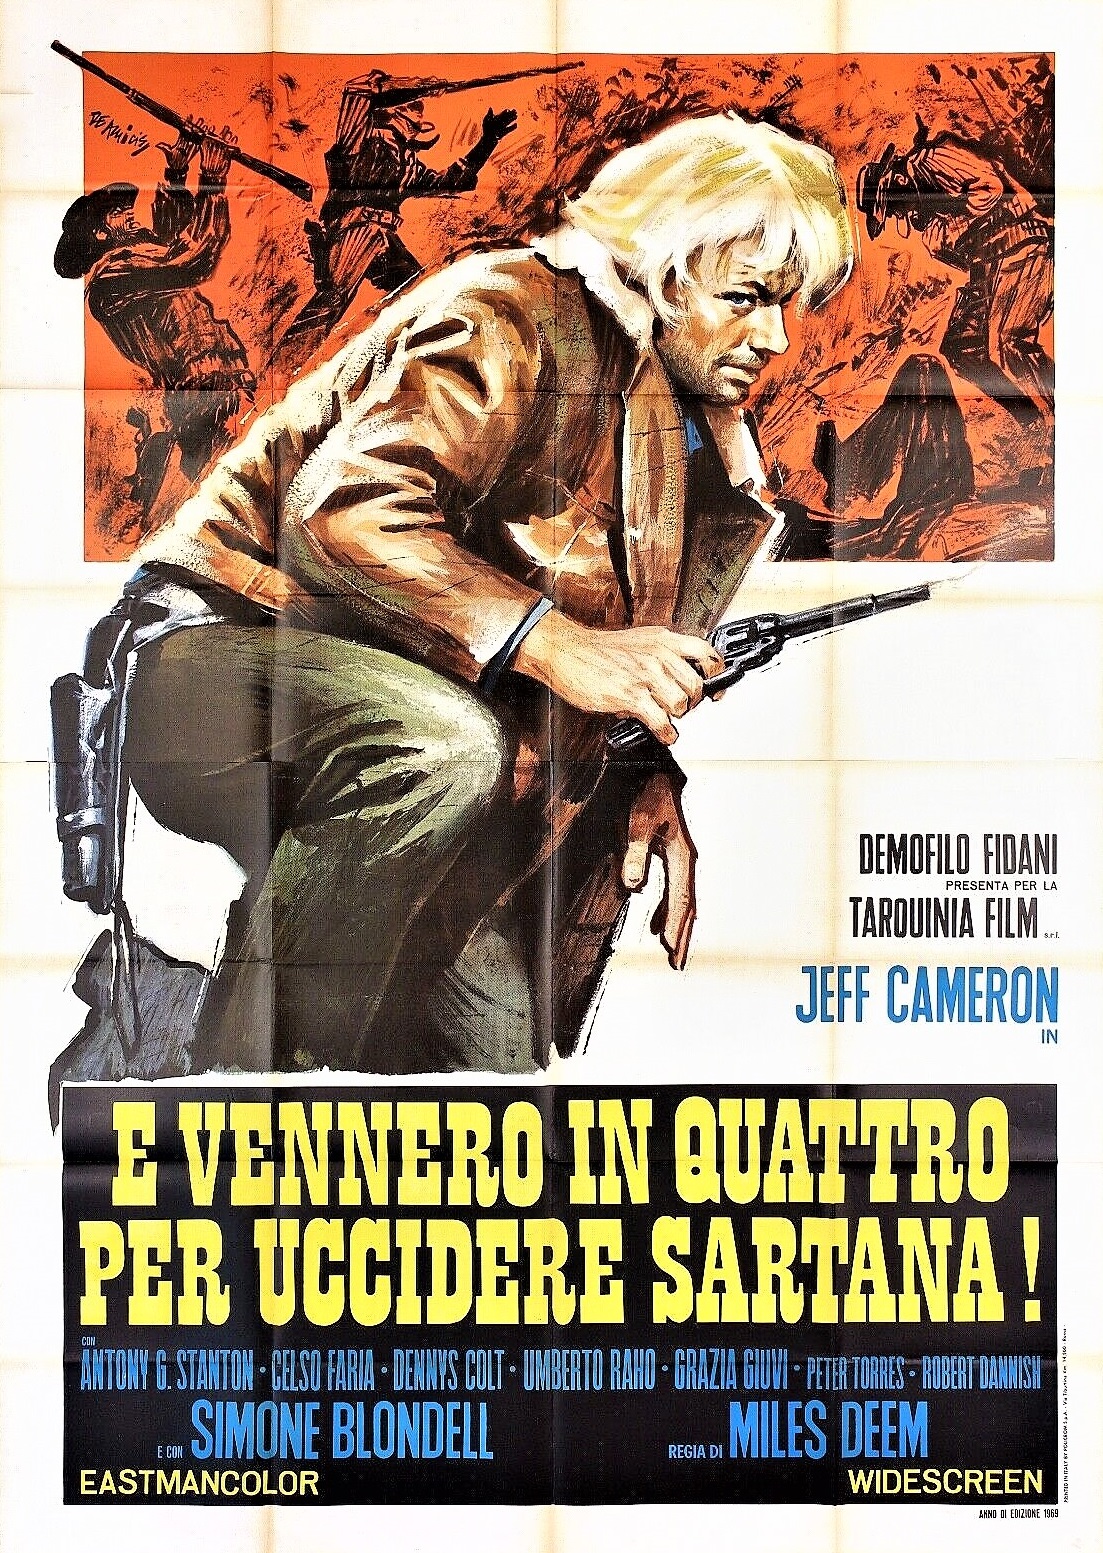 4 Came to Kill Sartana movie poster